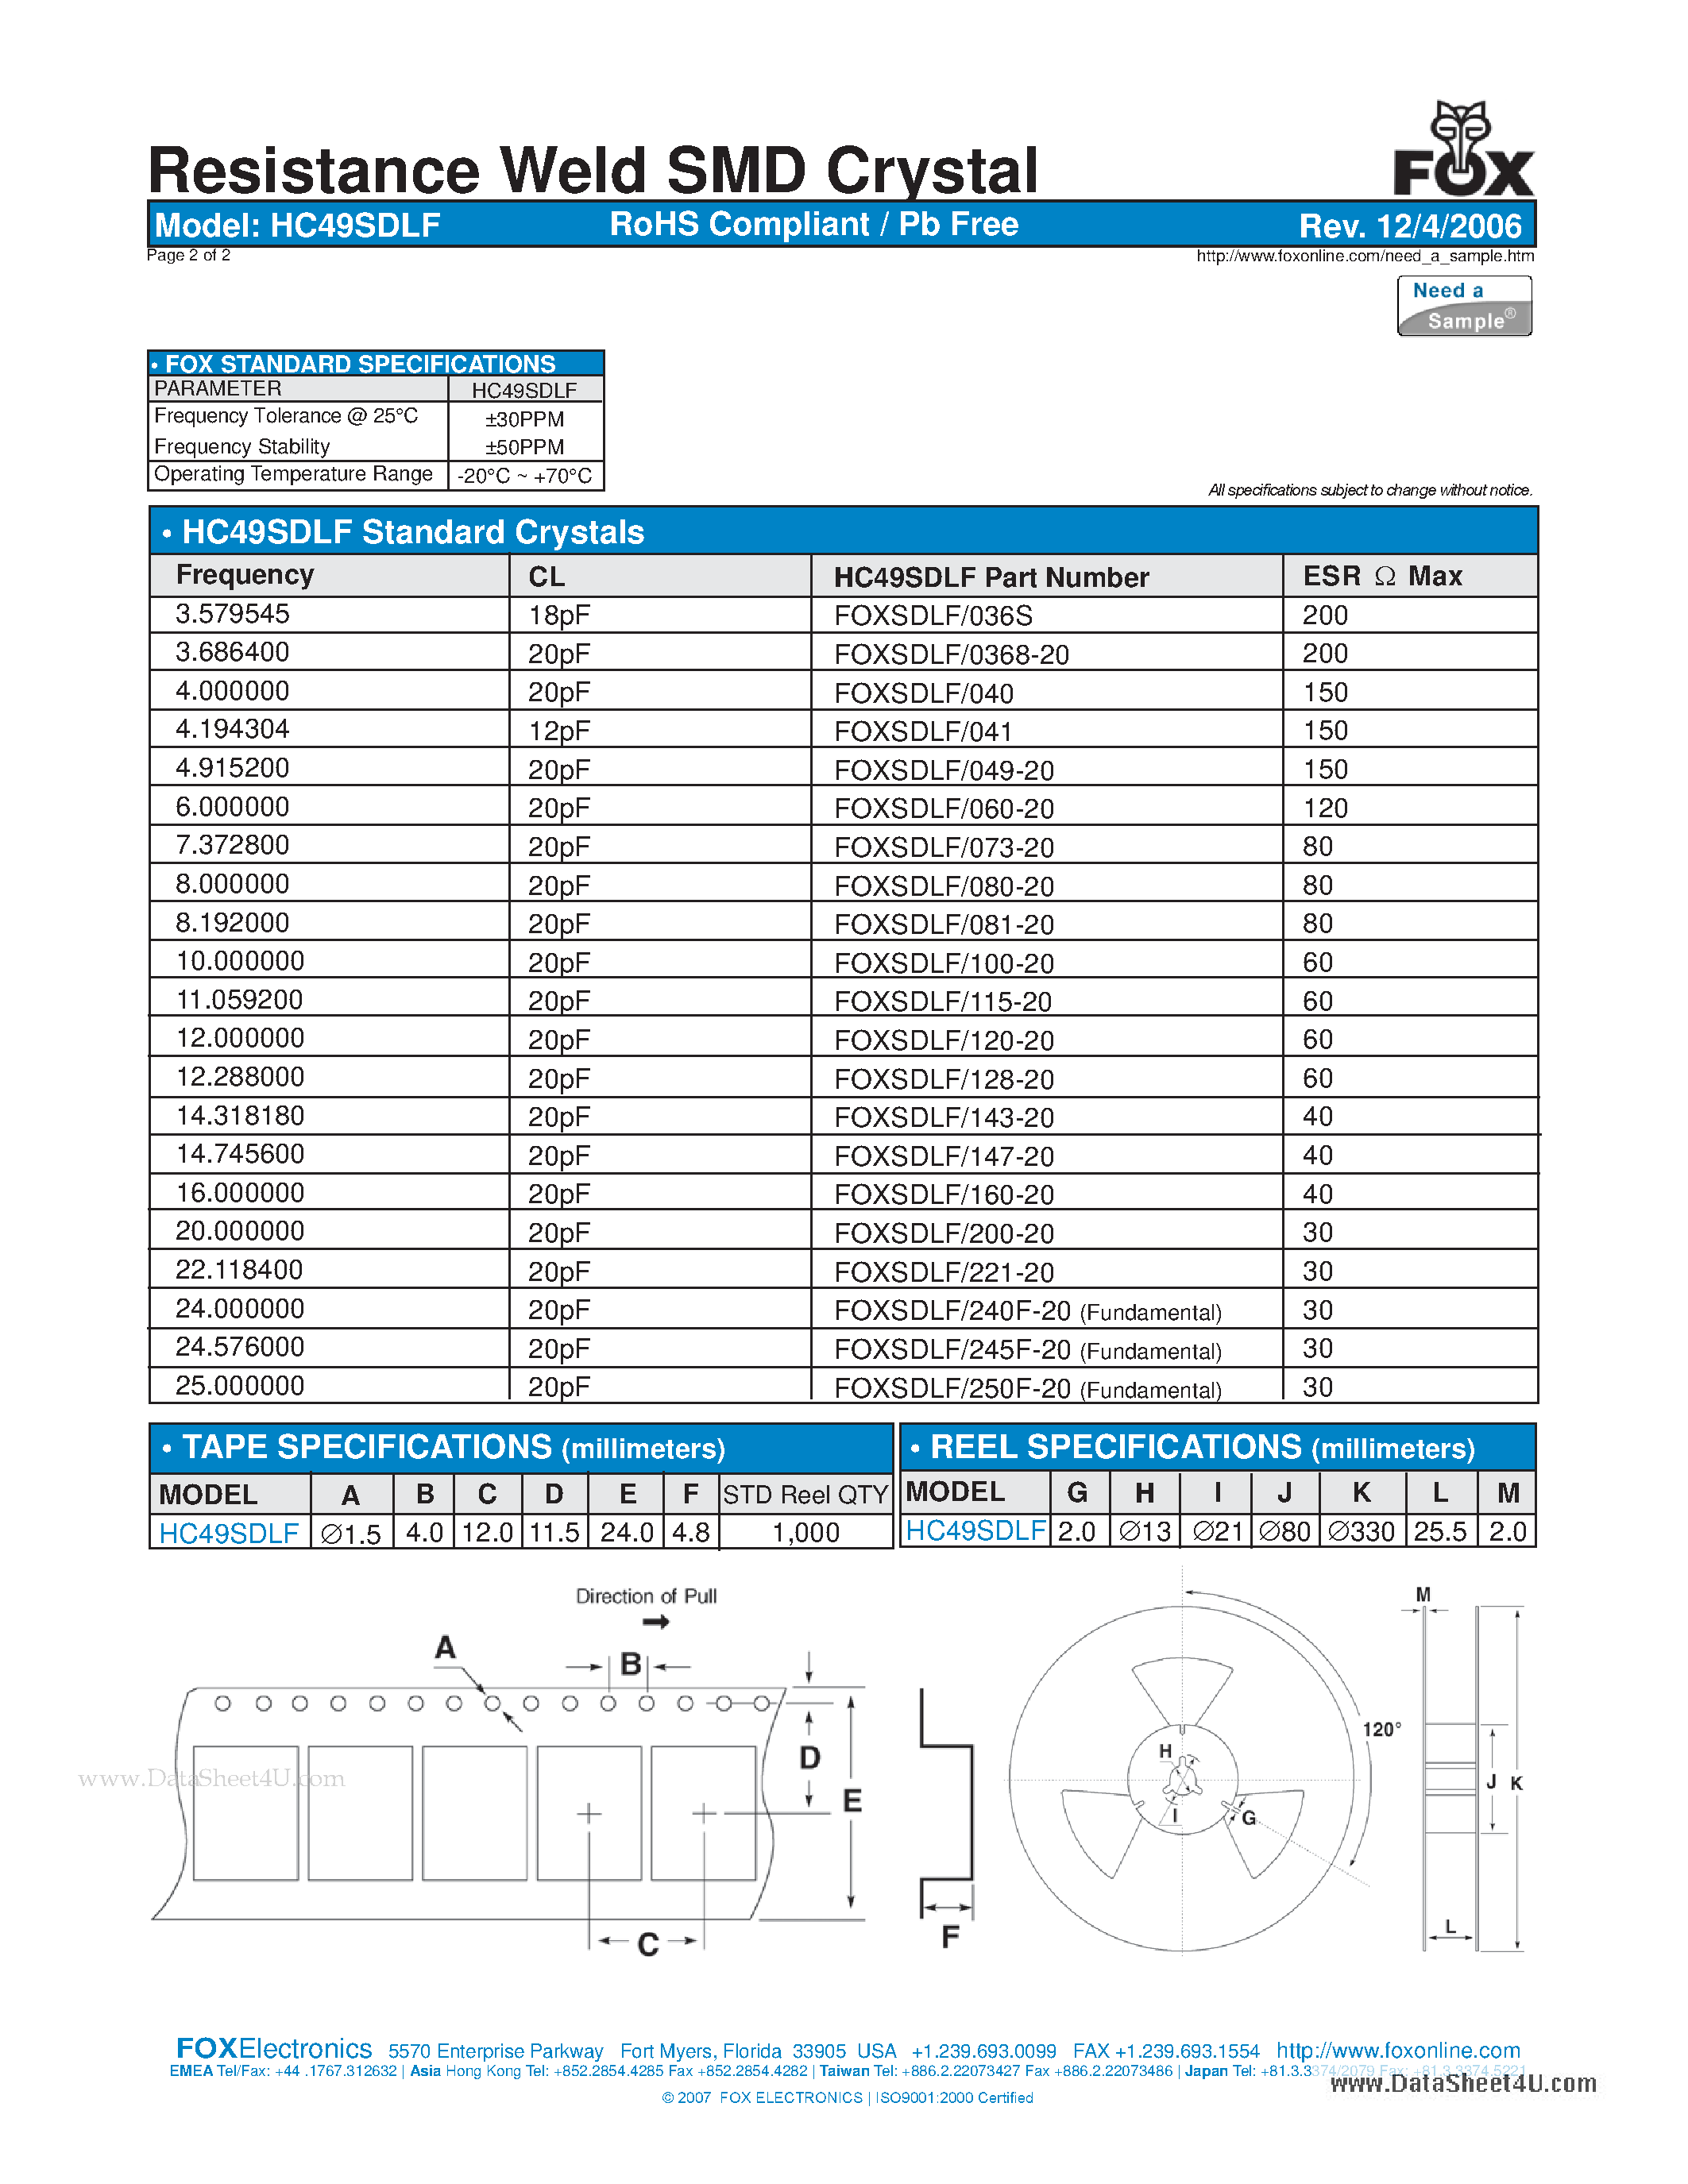 Datasheet 278LF-6-14 - Crystal page 2